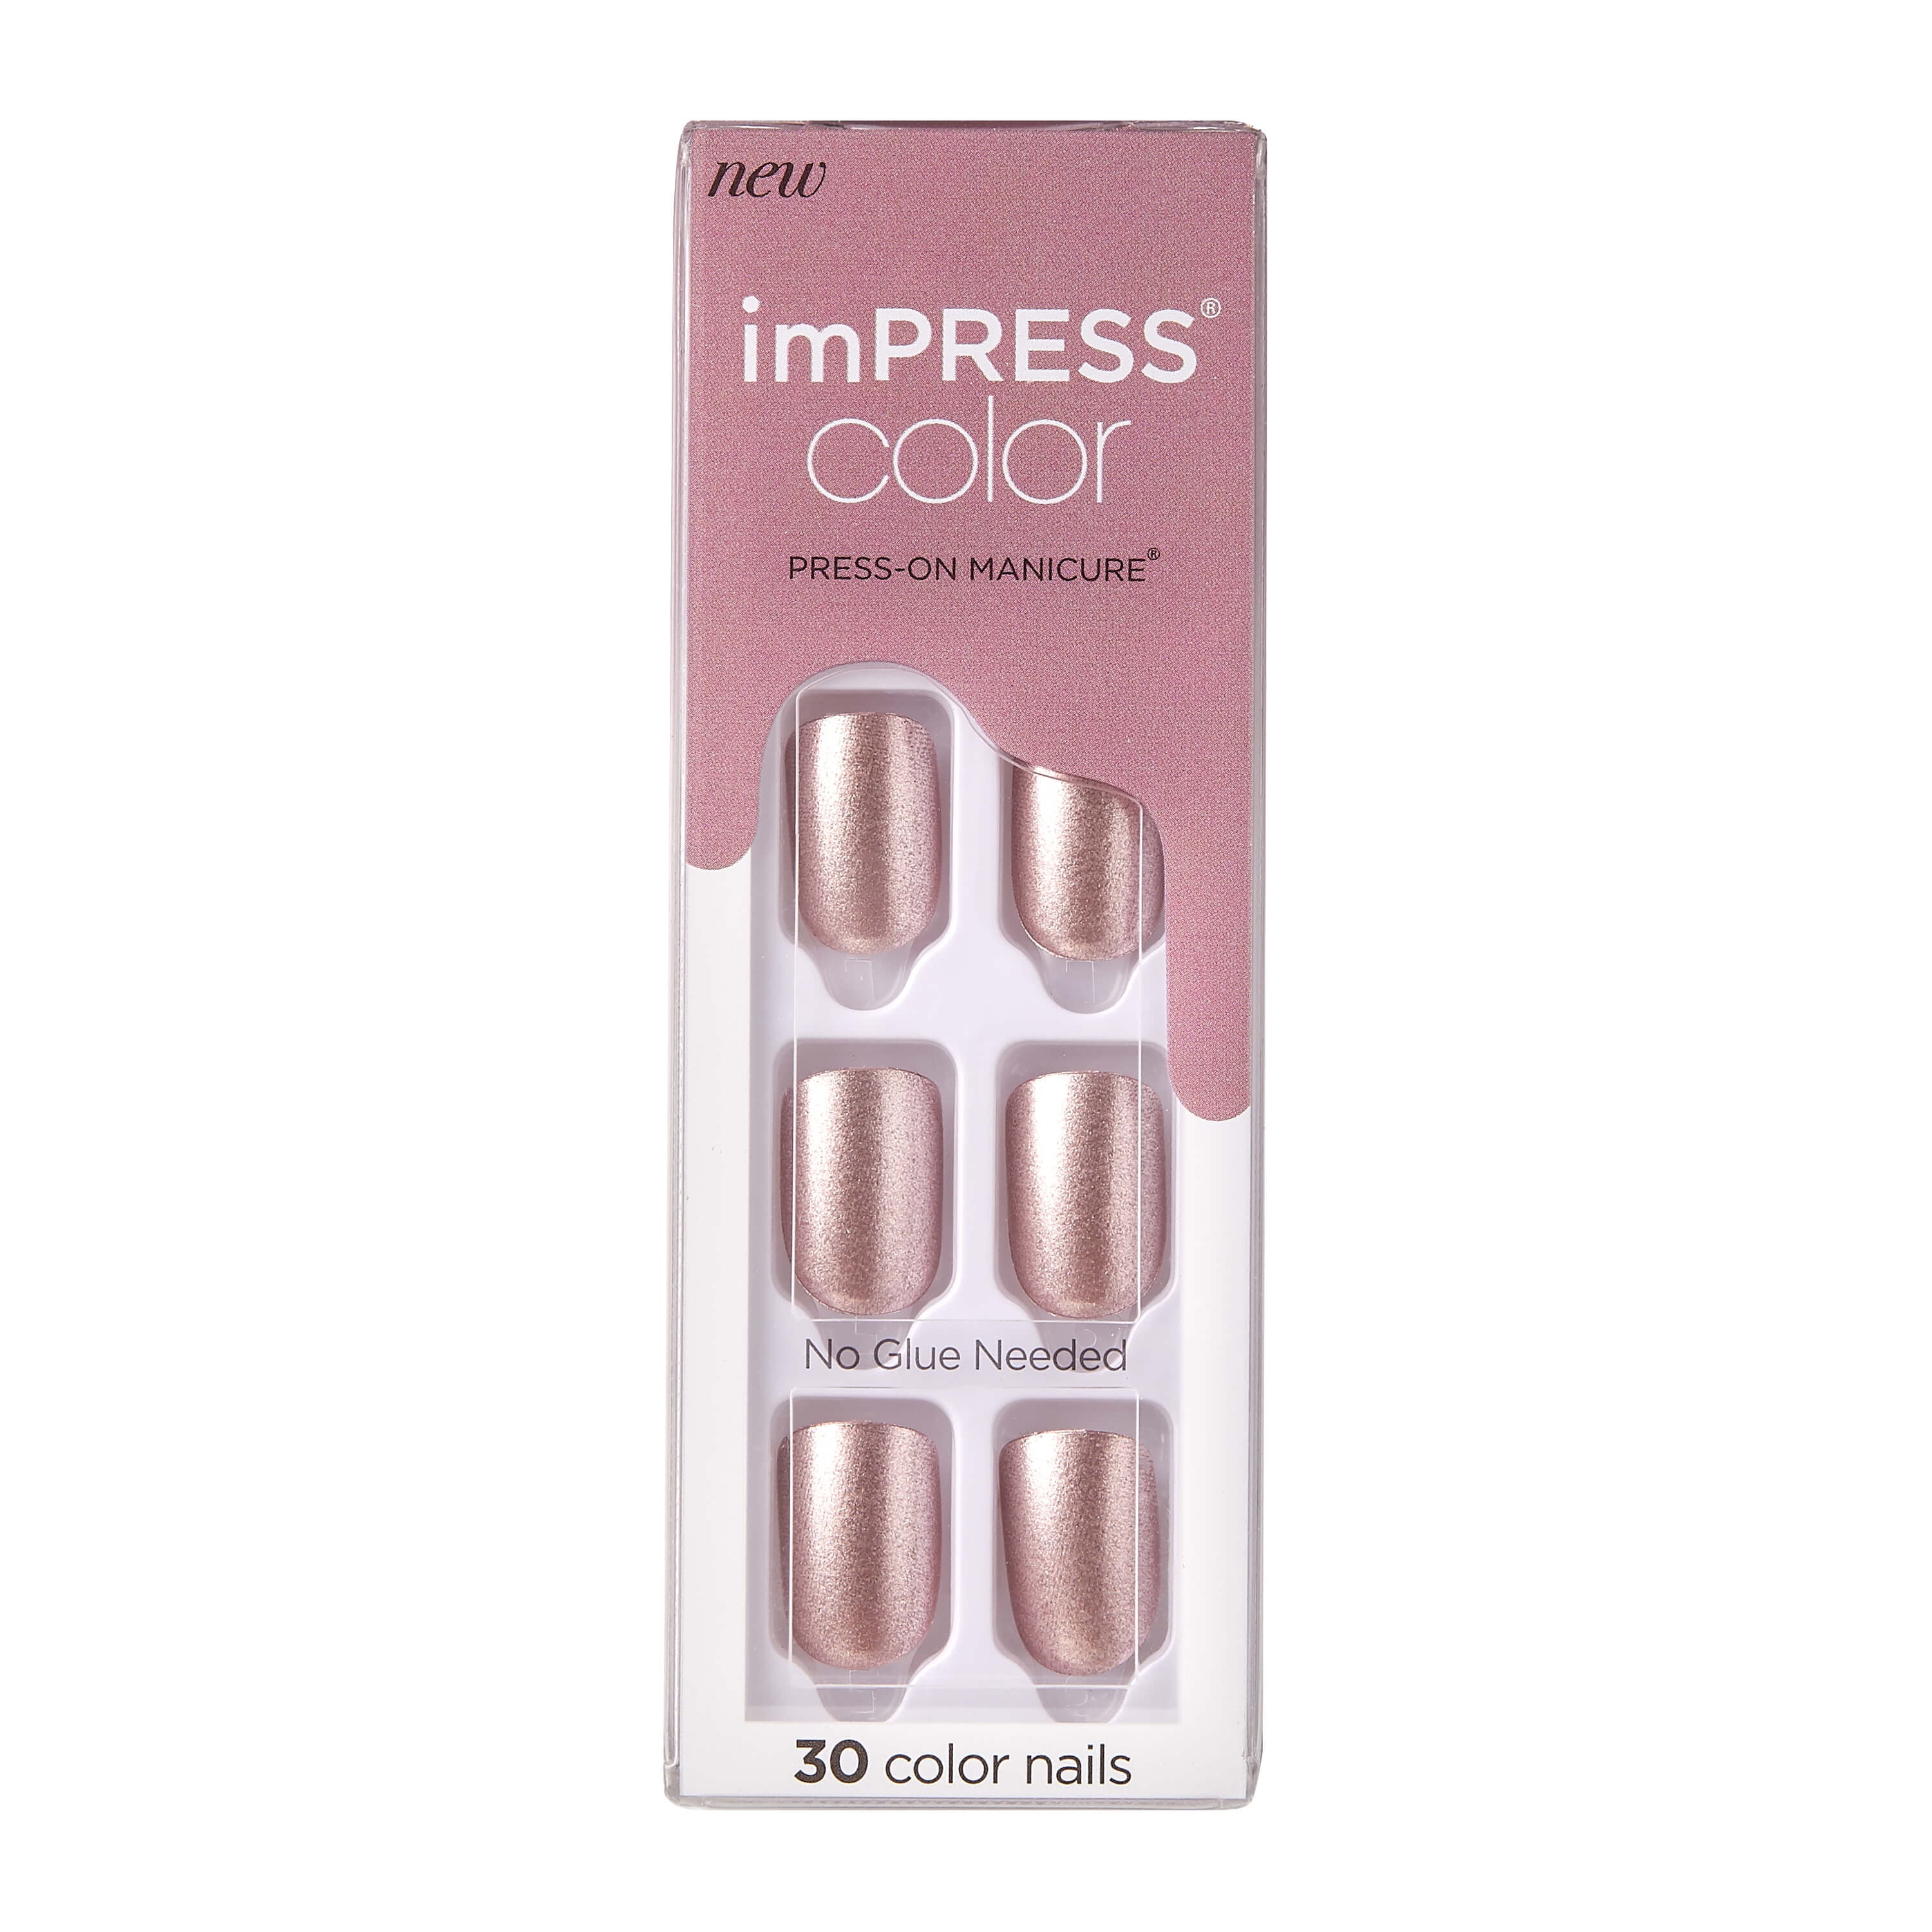 imPRESS Color Press-on Manicure, Paralyzed Pink, Short - Walmart.com